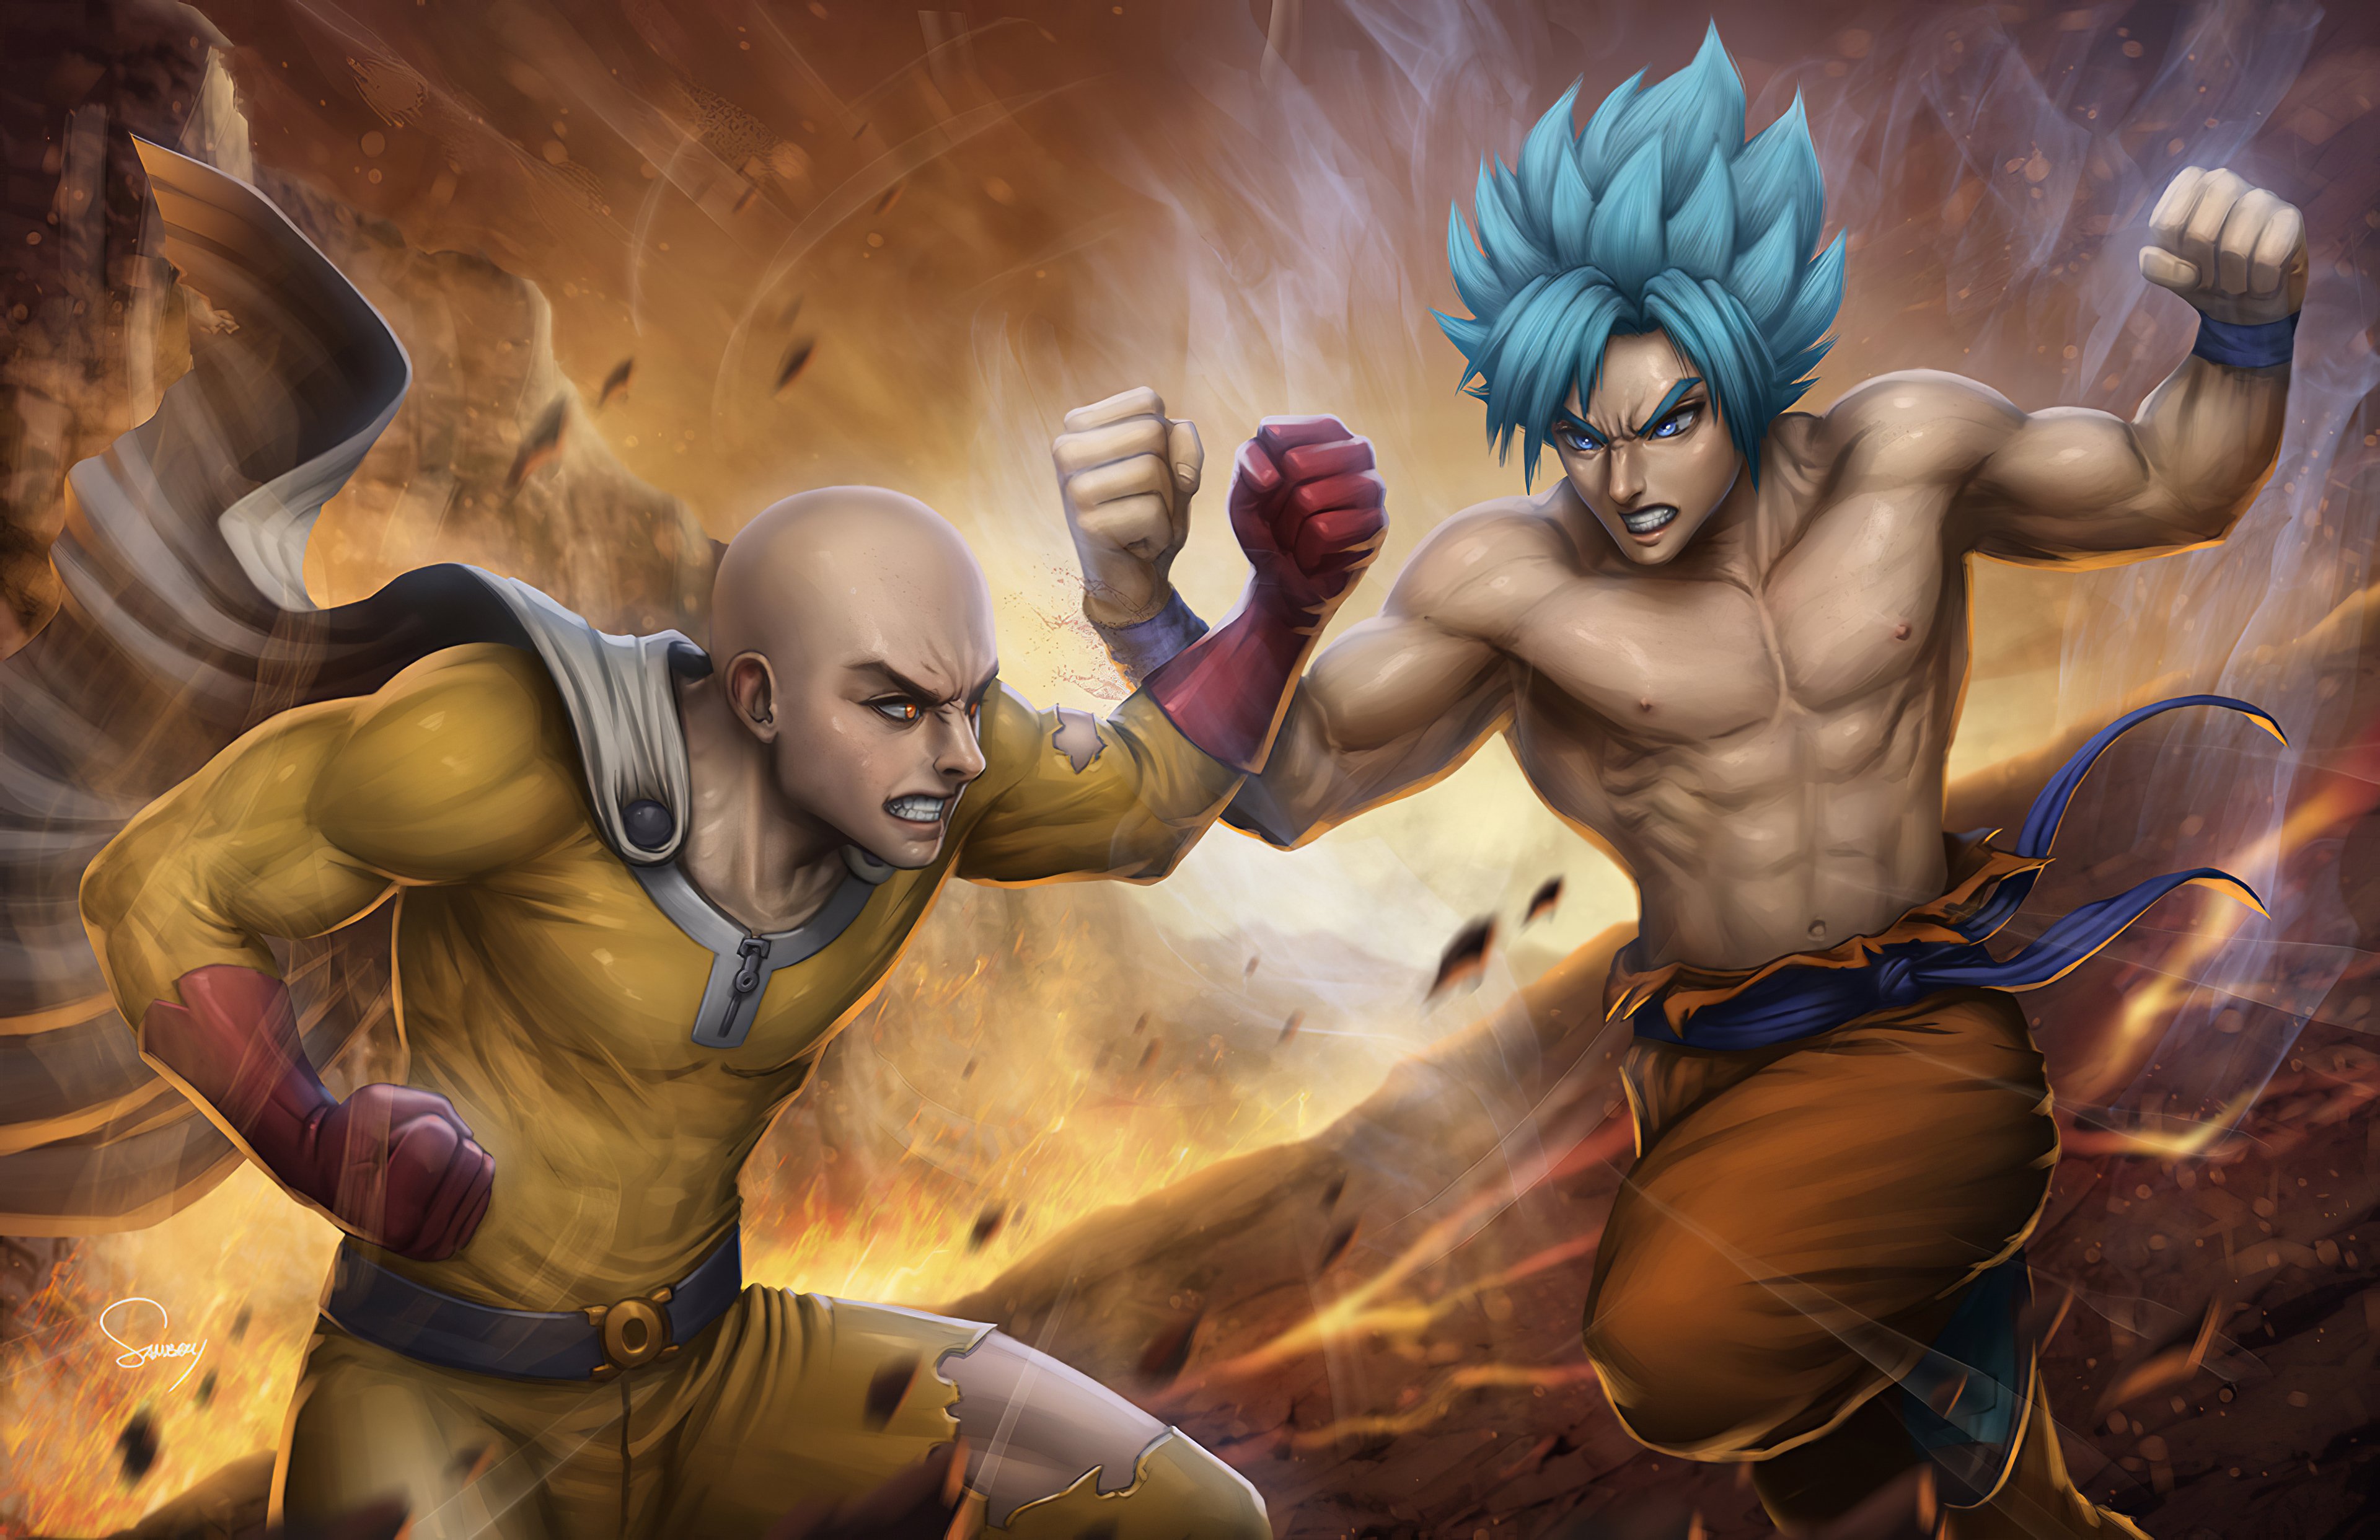 Saitama vs Goku Anime Wallpaper 4k Ultra HD